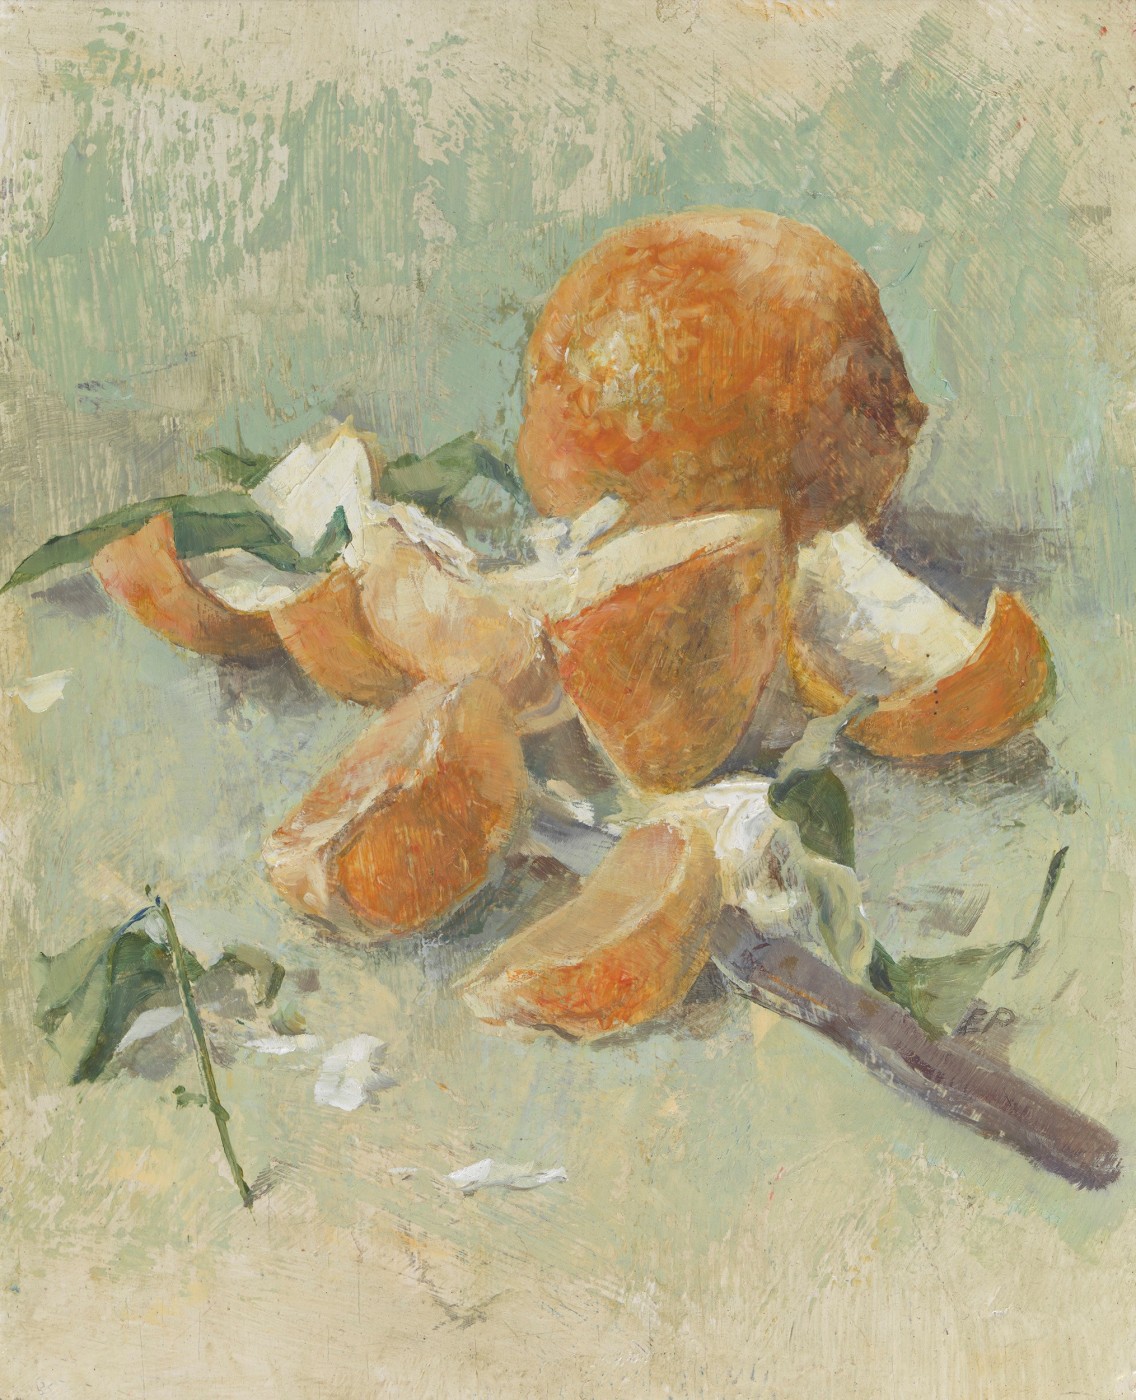 Emily Patrick (b. 1959), Oranges